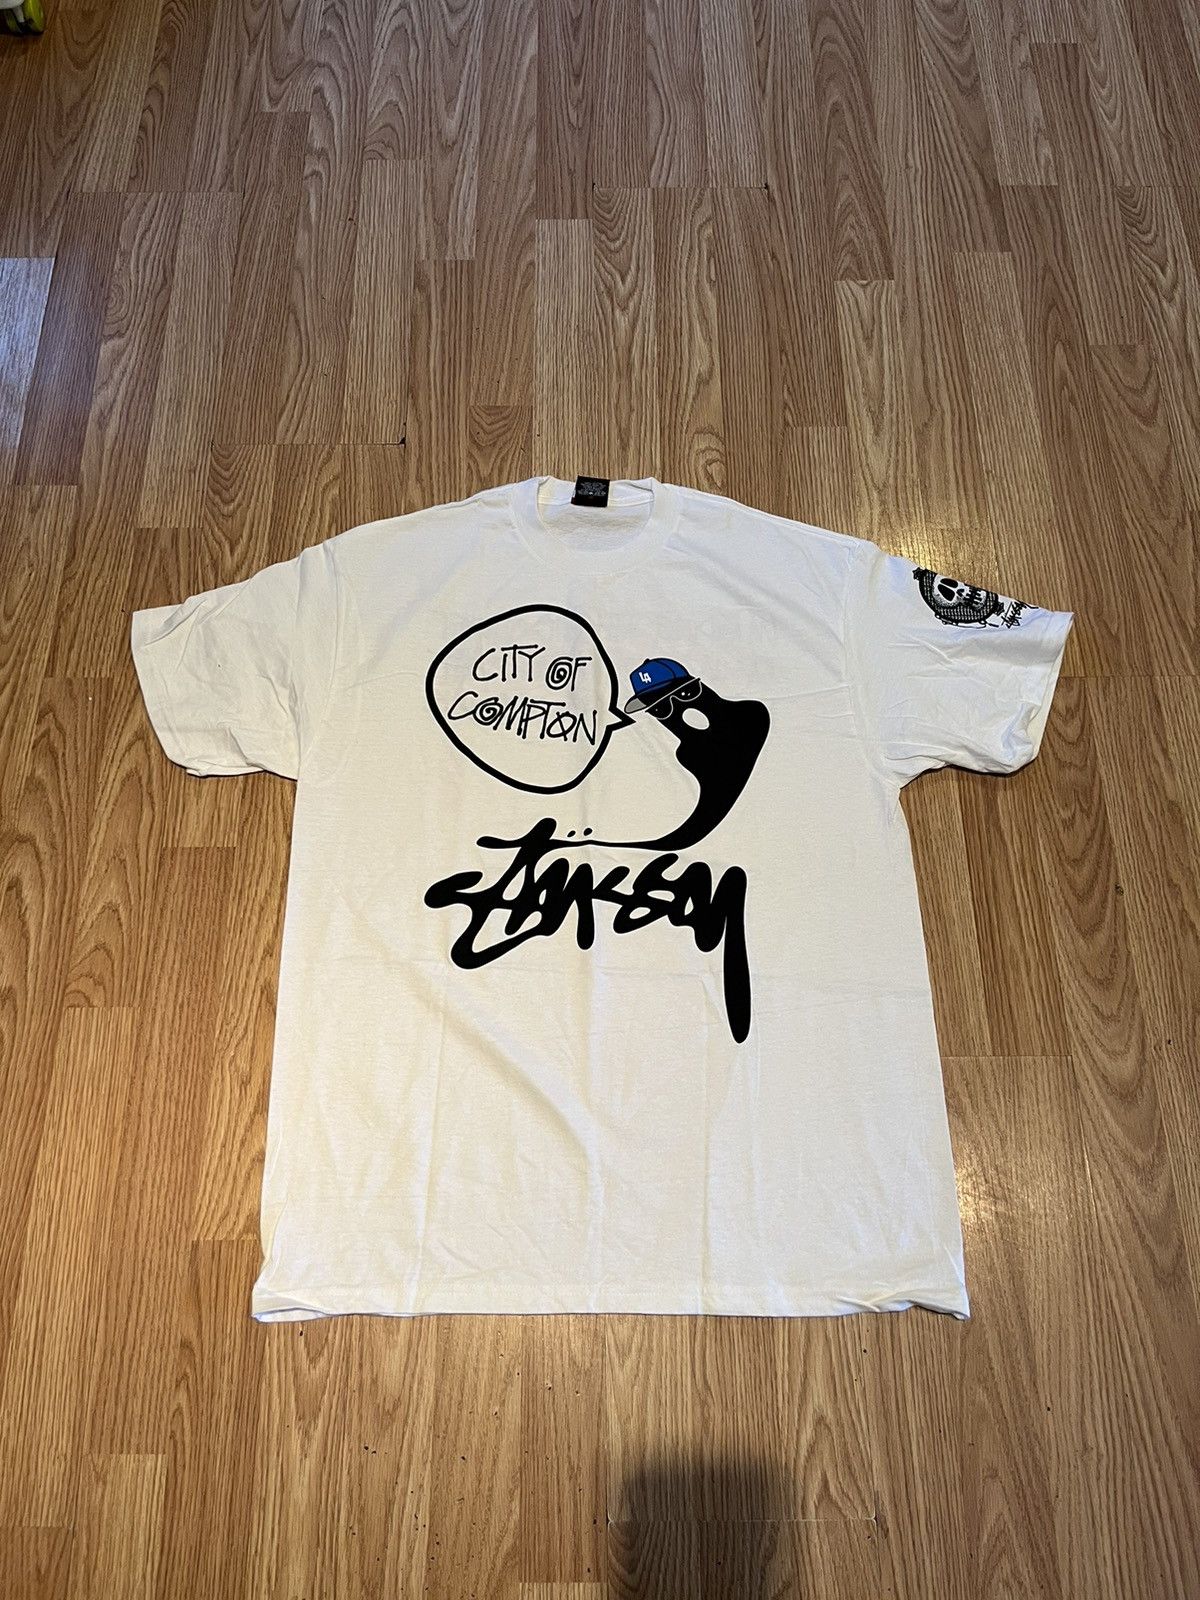 Stussy Stussy Compton T Shirt | Grailed